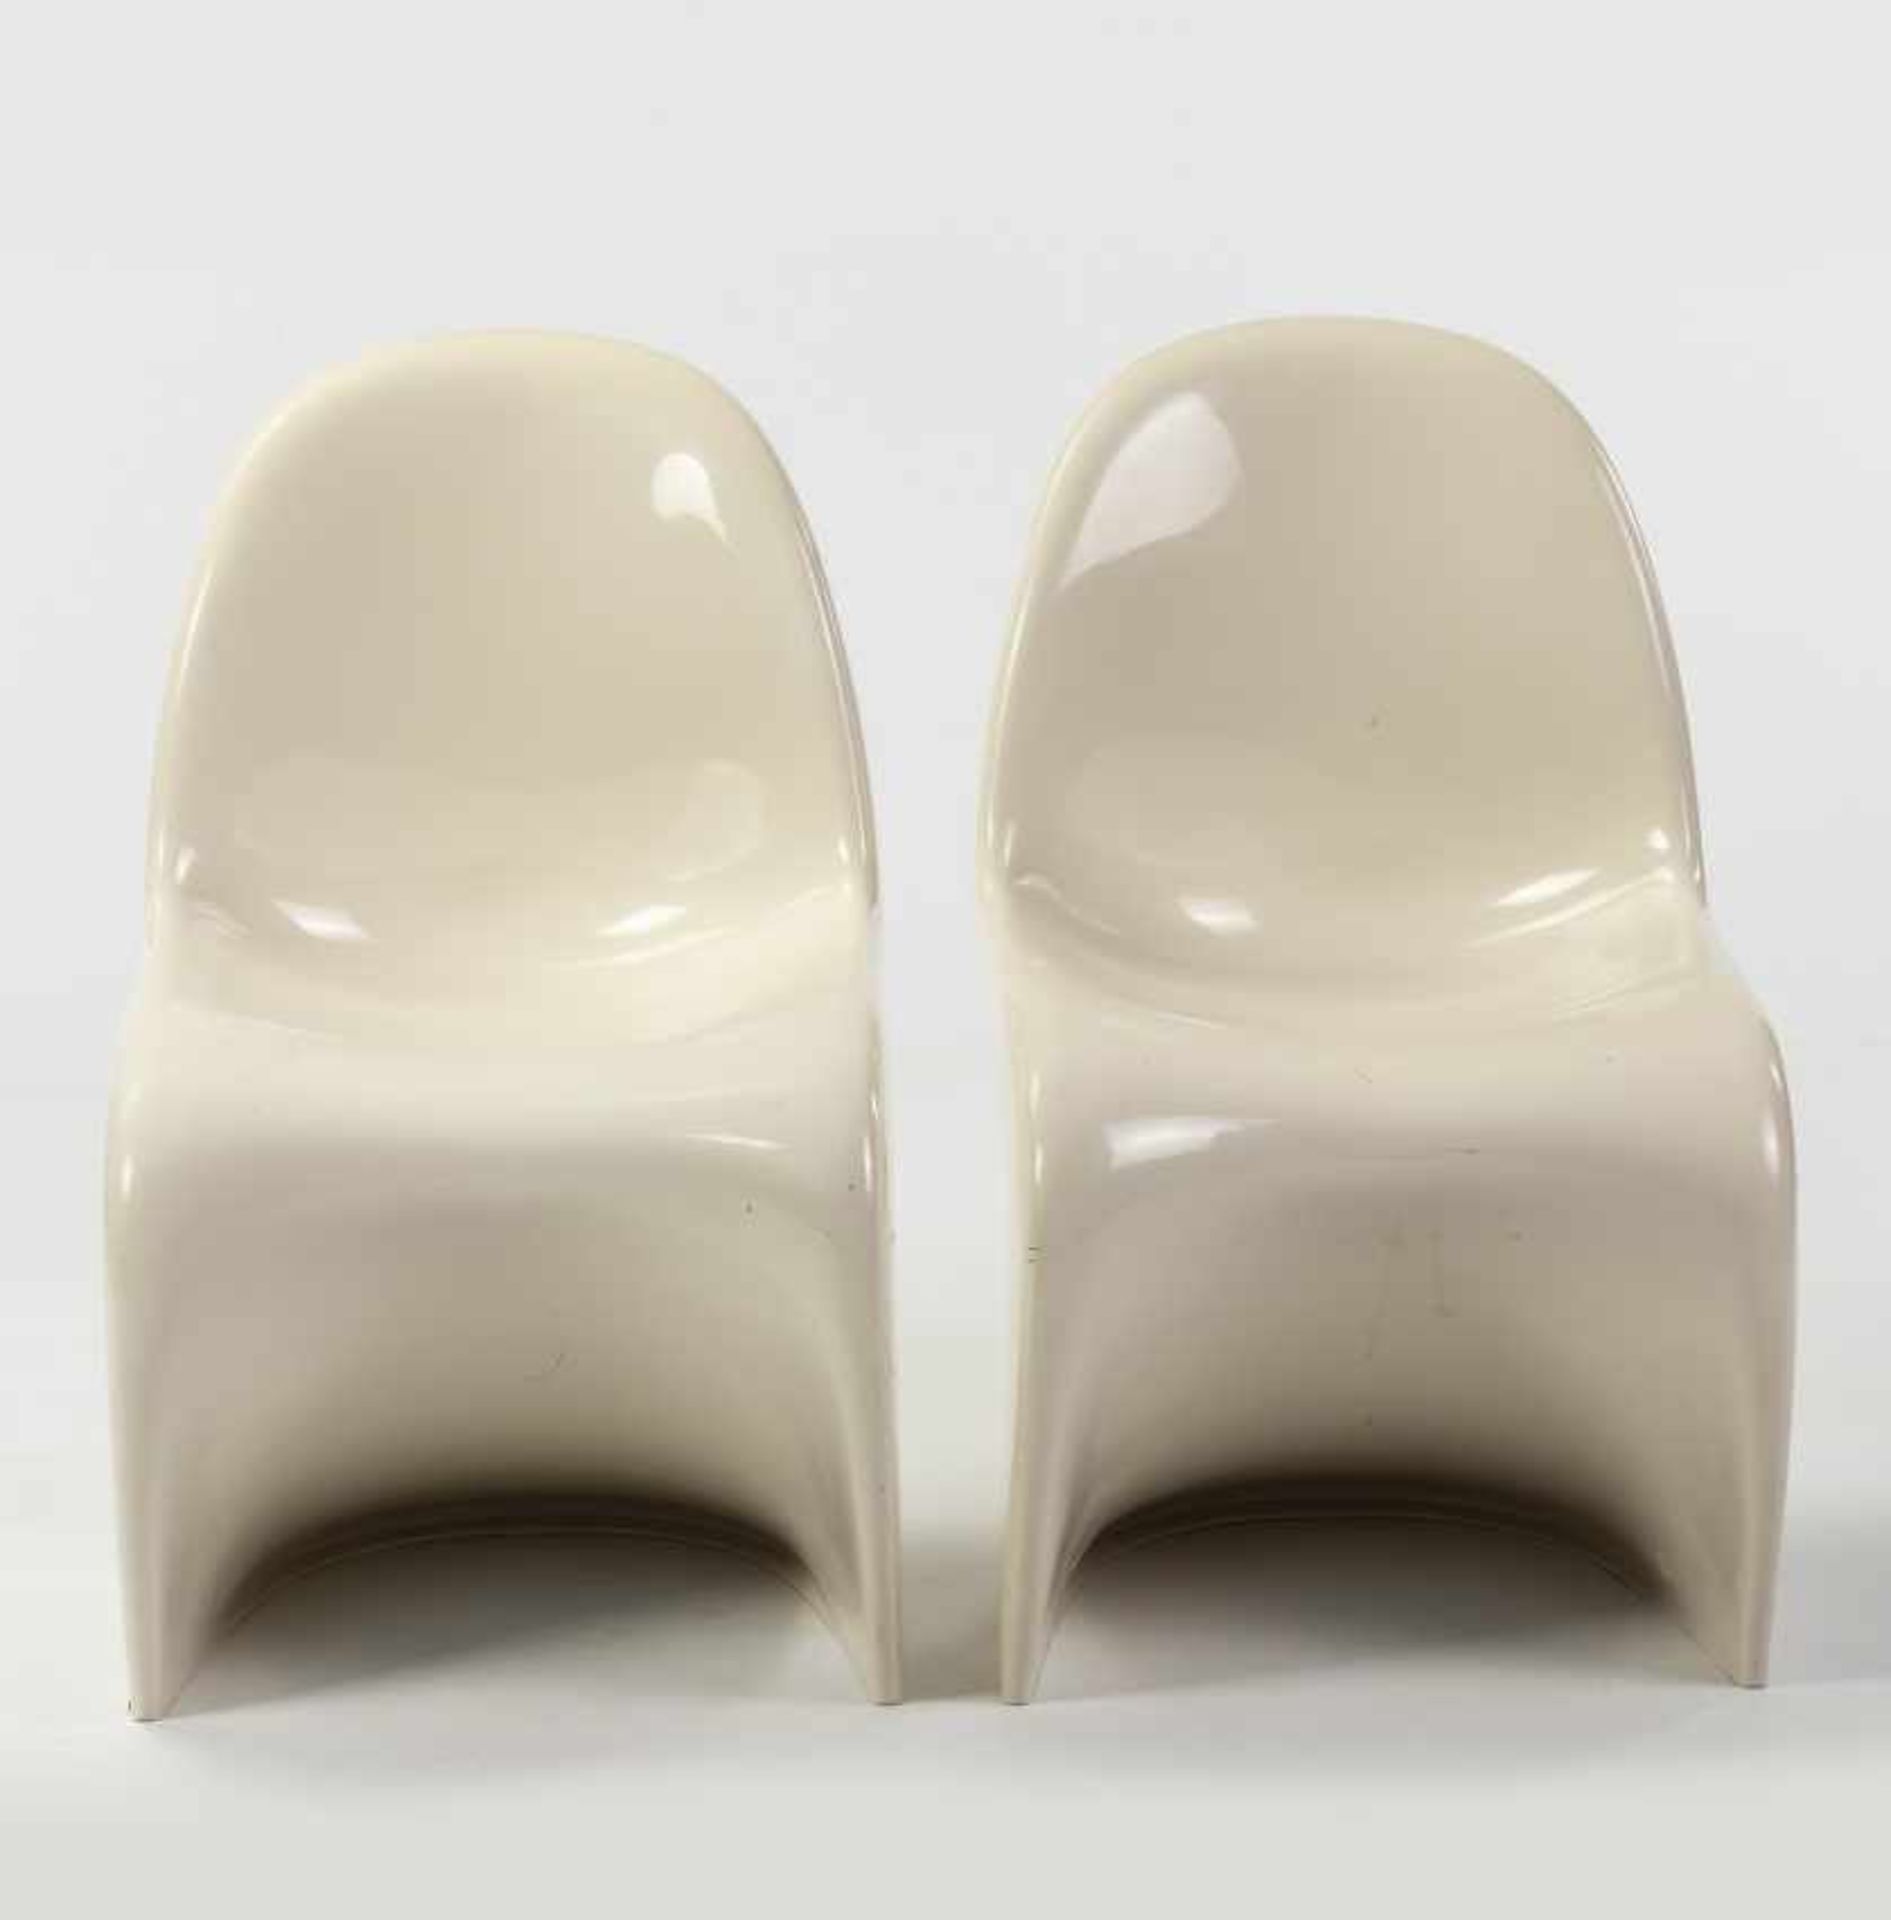 Verner Panton, Pair of "Panton" chairs, Moulded plasticVerner PantonGamtofte 1926 - Copenhagen 1998. - Bild 2 aus 3